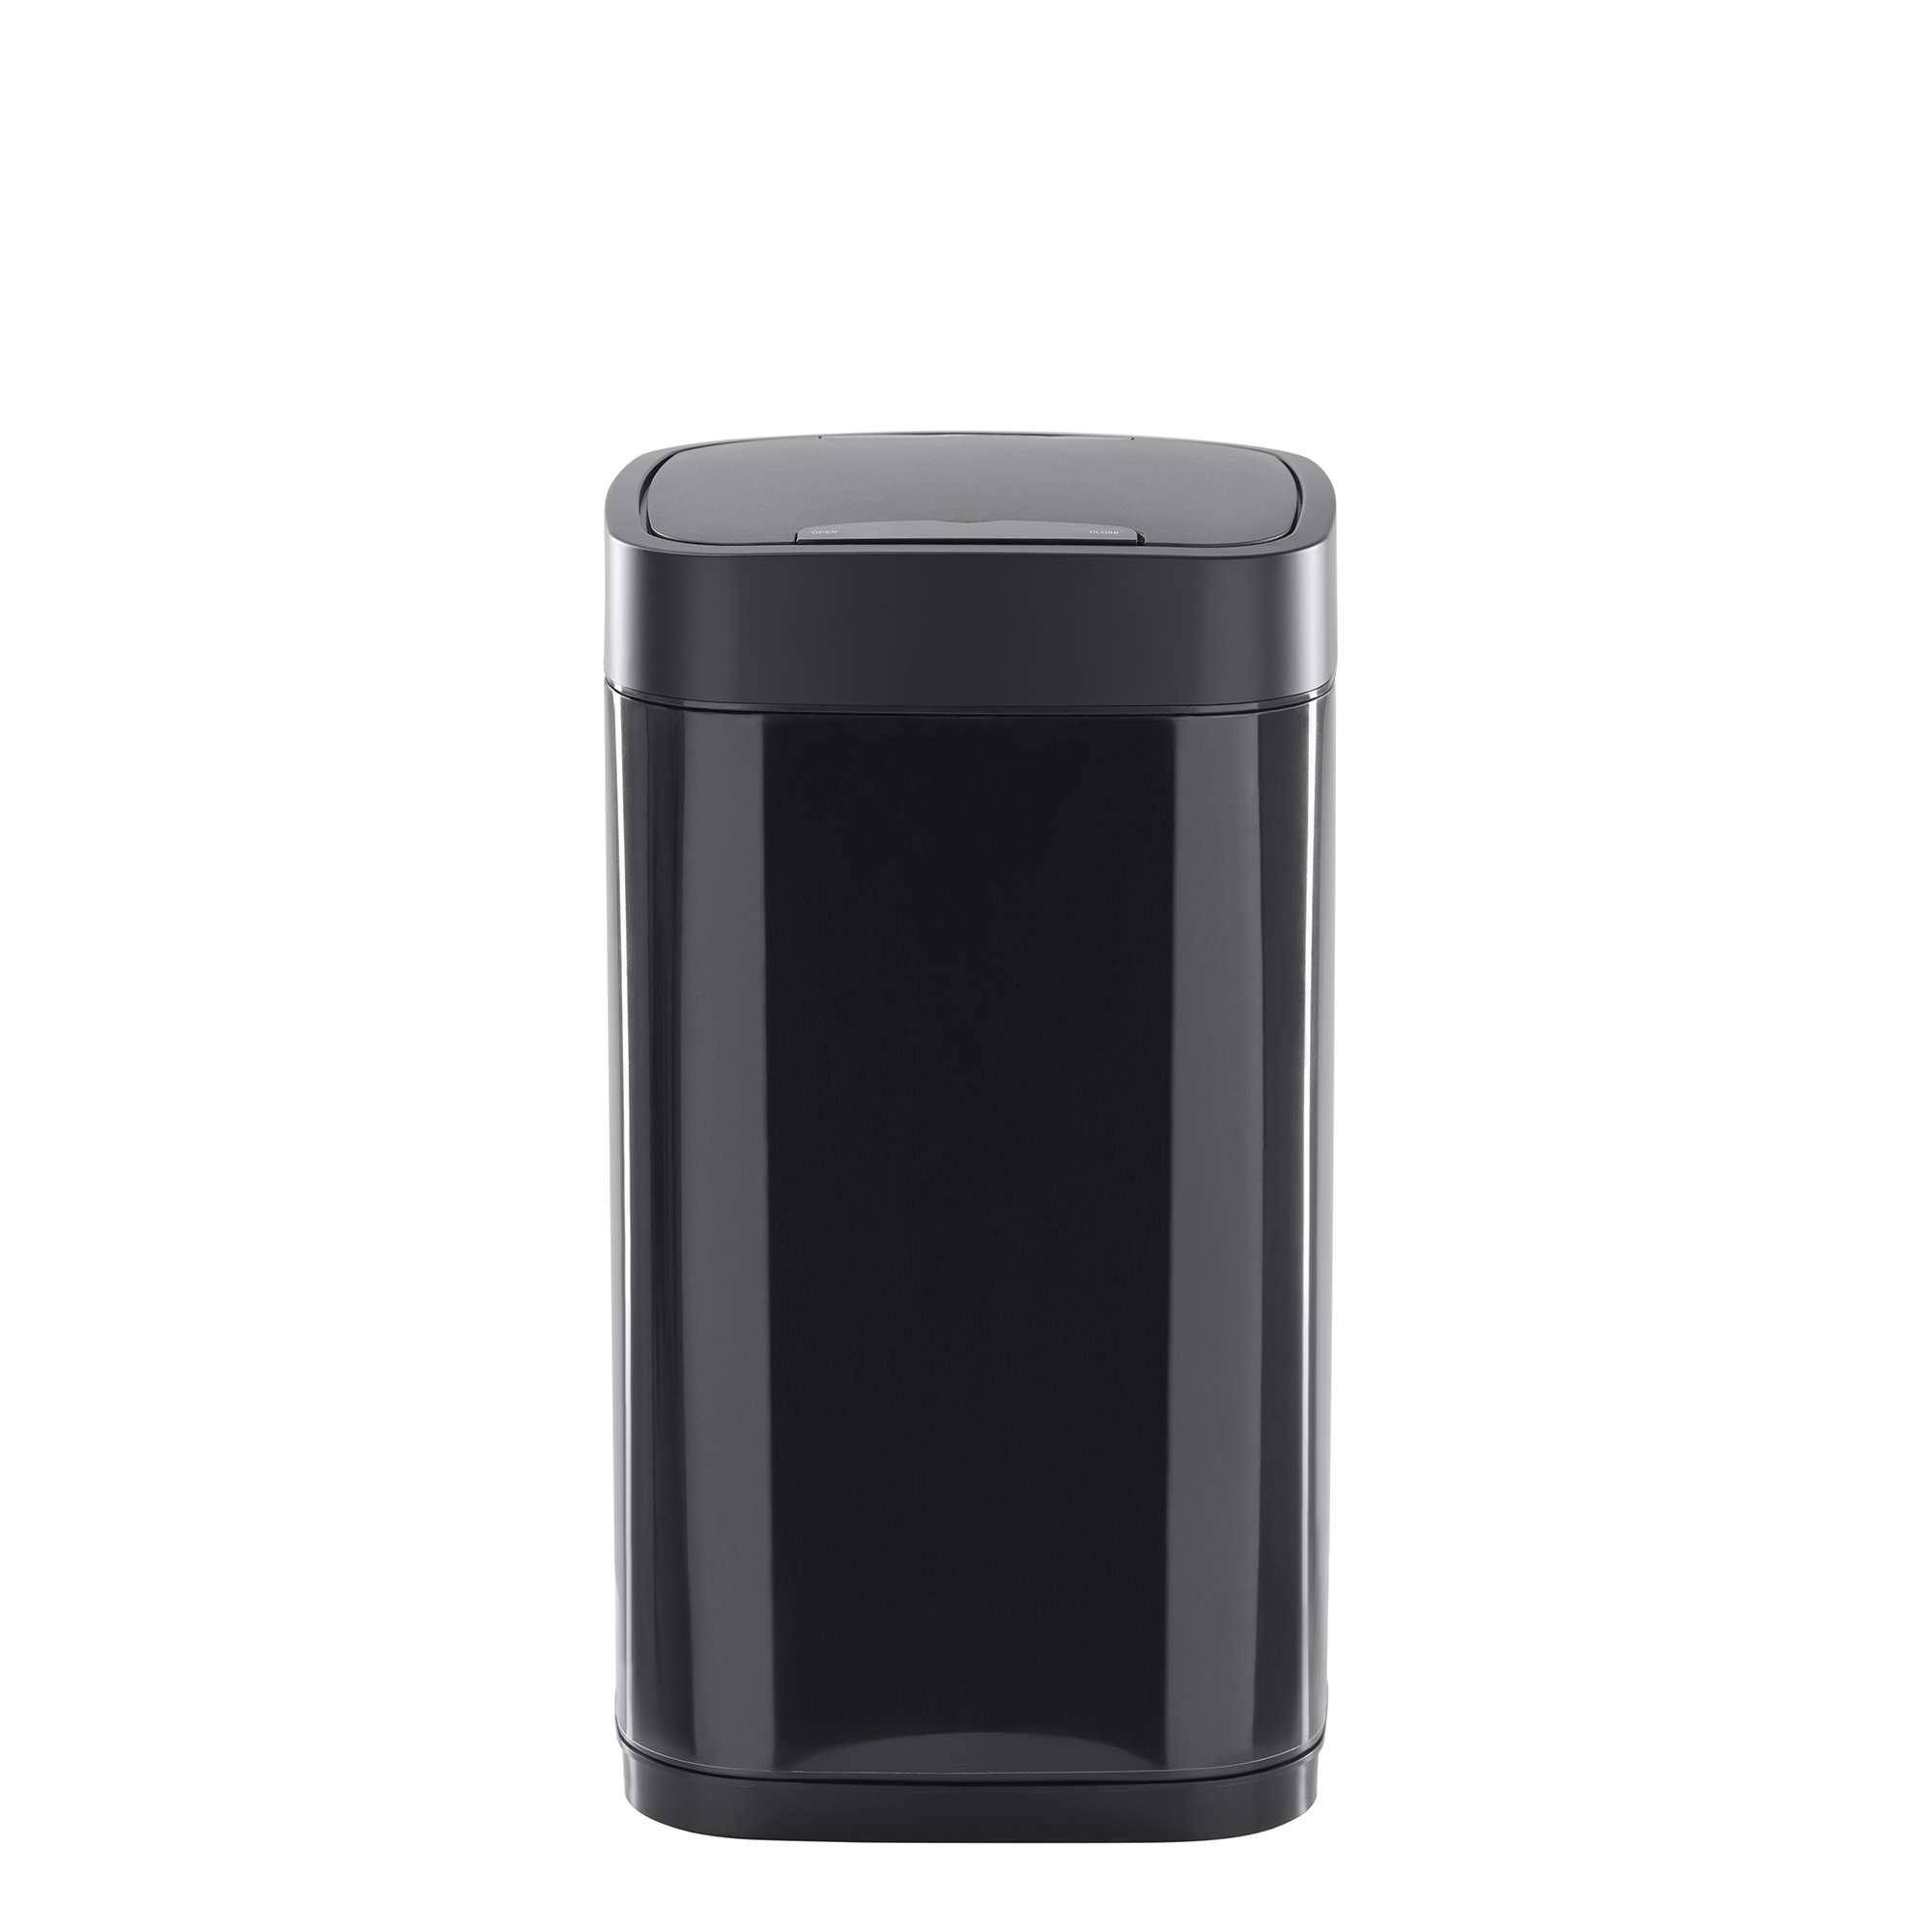 фото Сенсорное ведро для мусора tesler stb-25 black